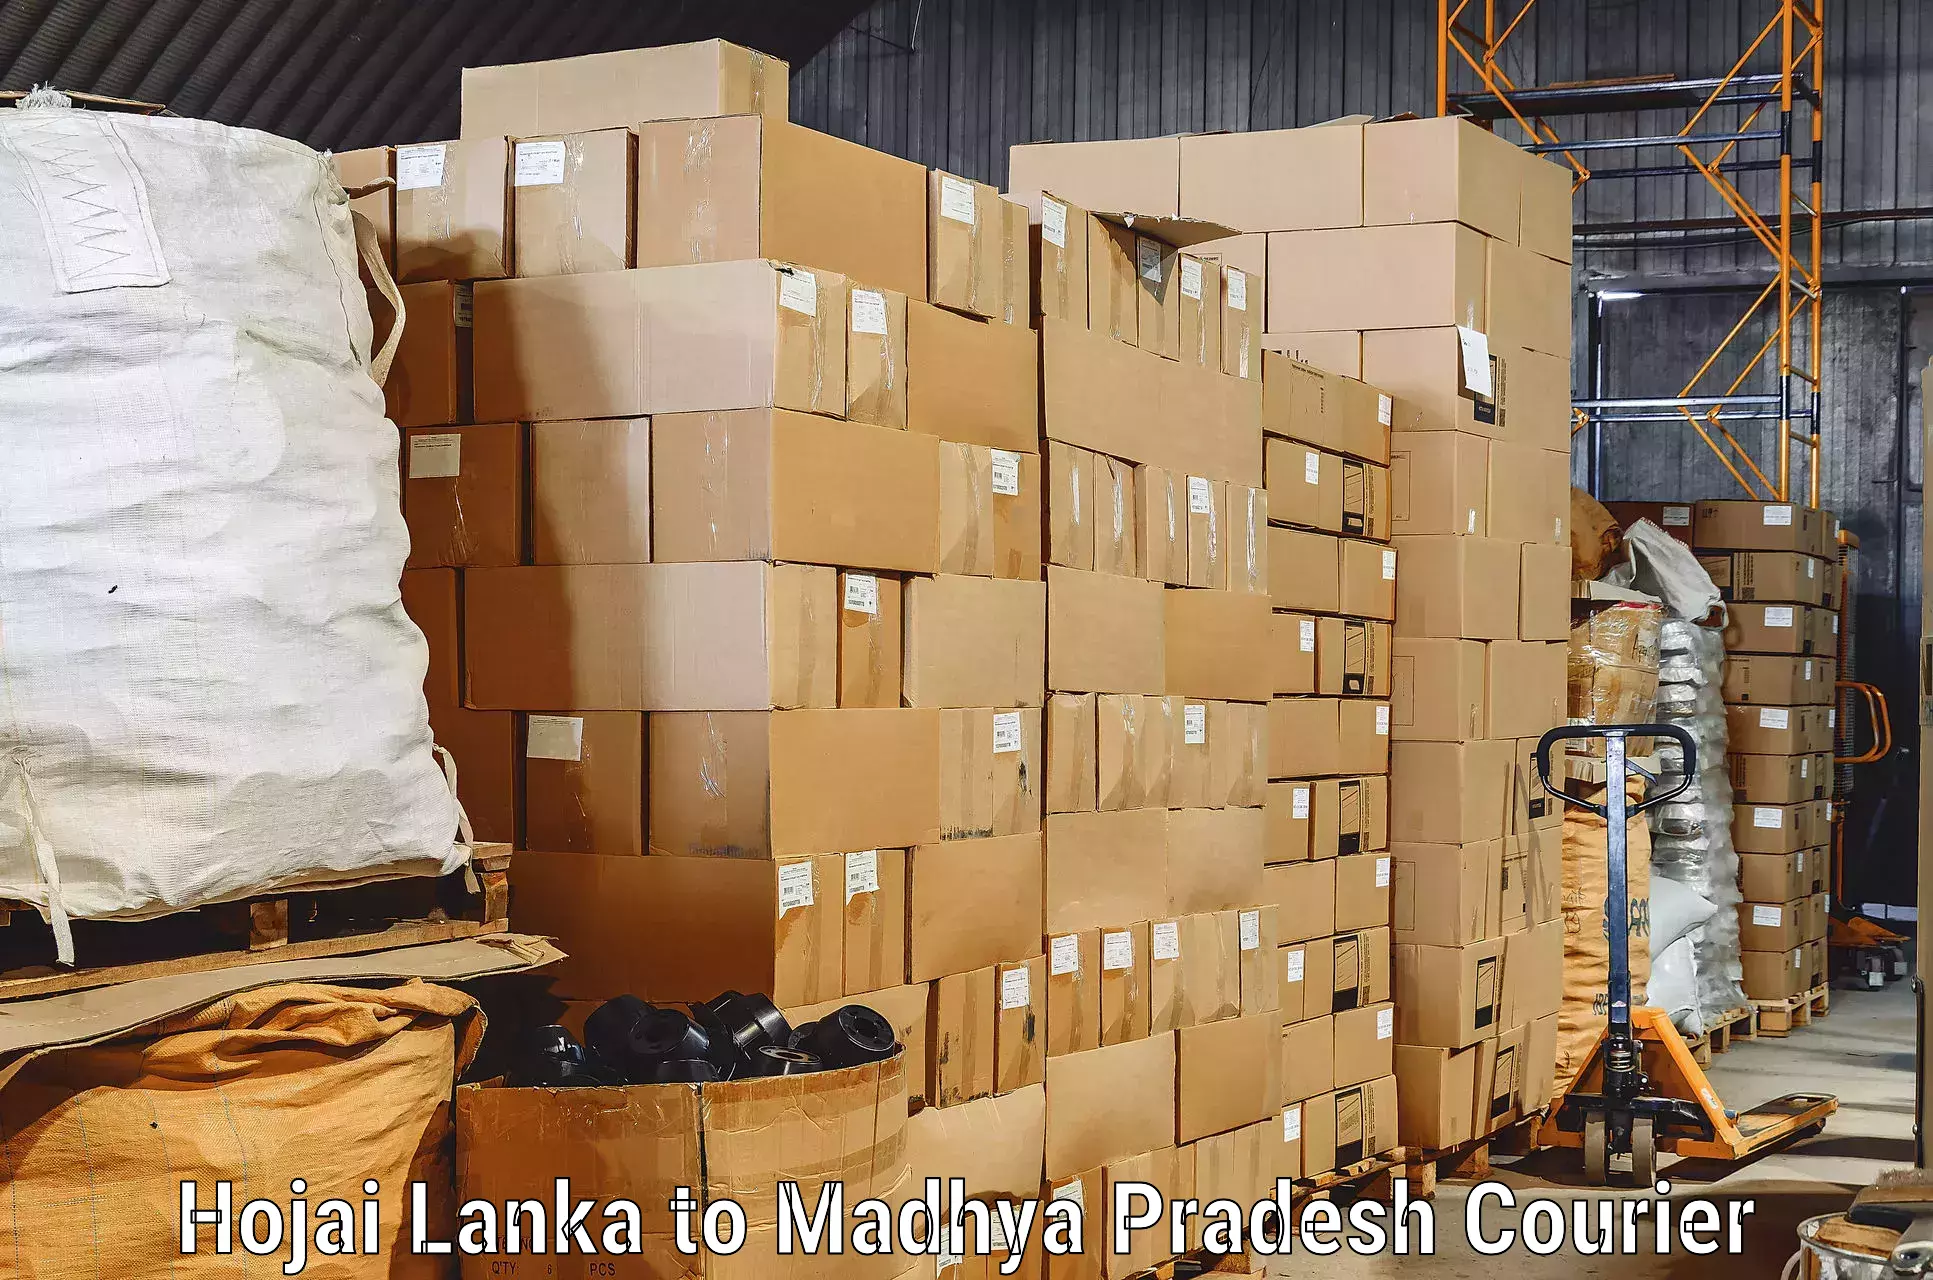 Moving and storage services Hojai Lanka to Jaora